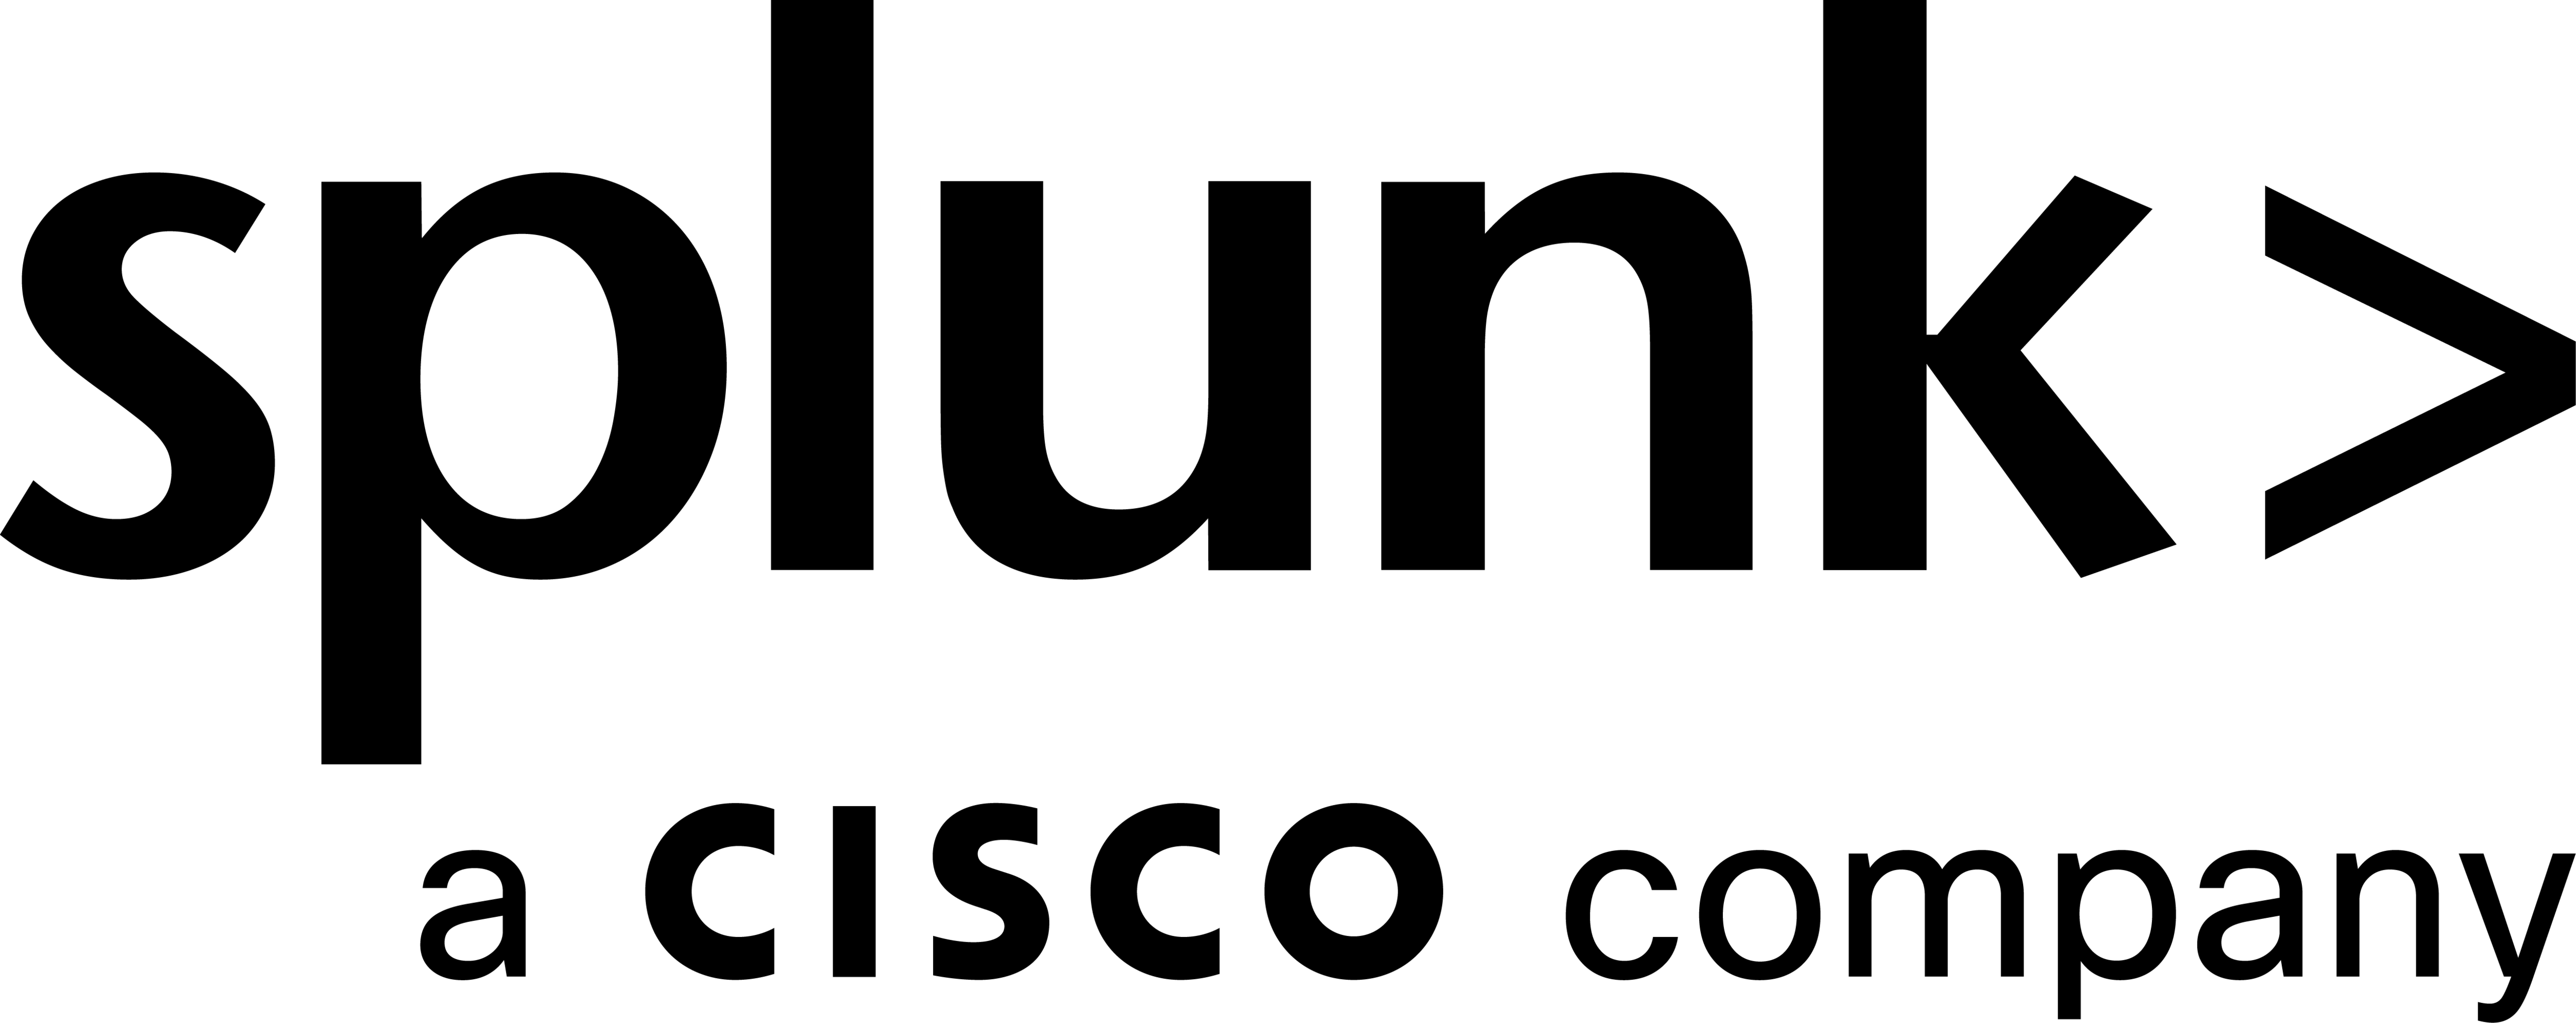 splunk logo black